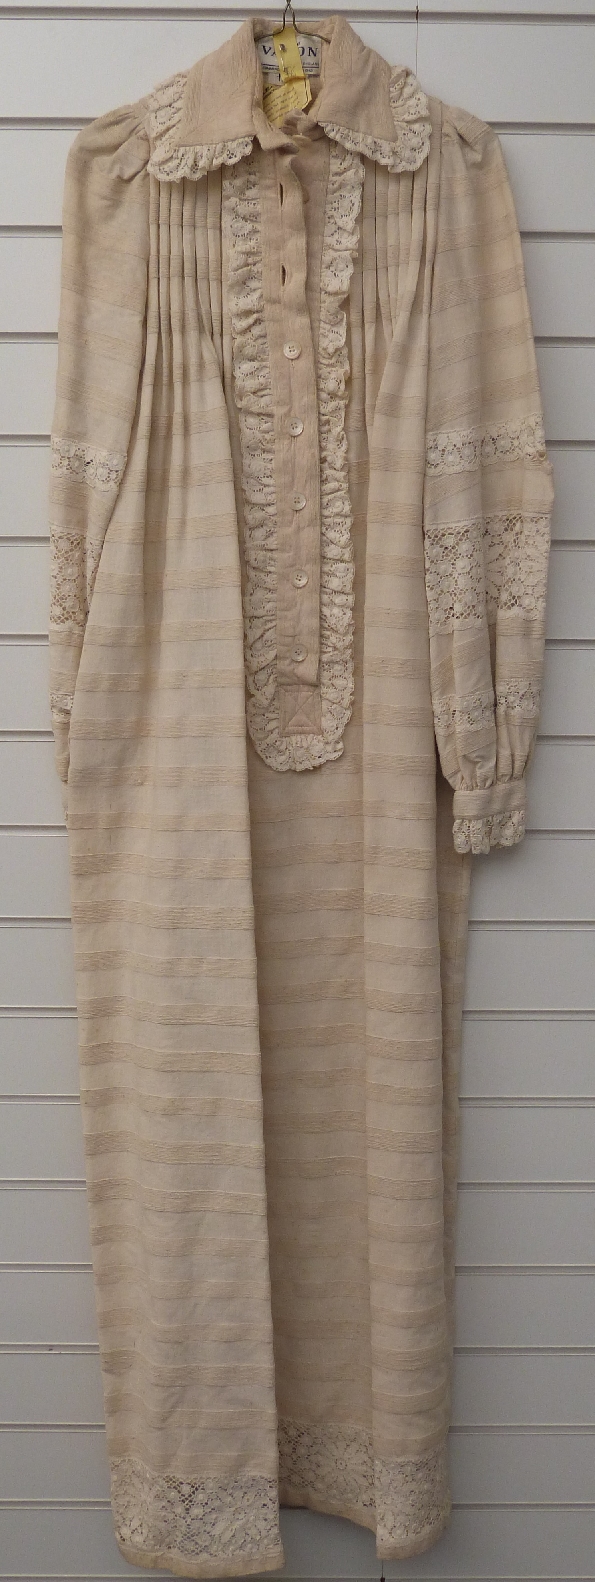 Edwardian ladies housecoat/dress with lace trim by Jean Varon